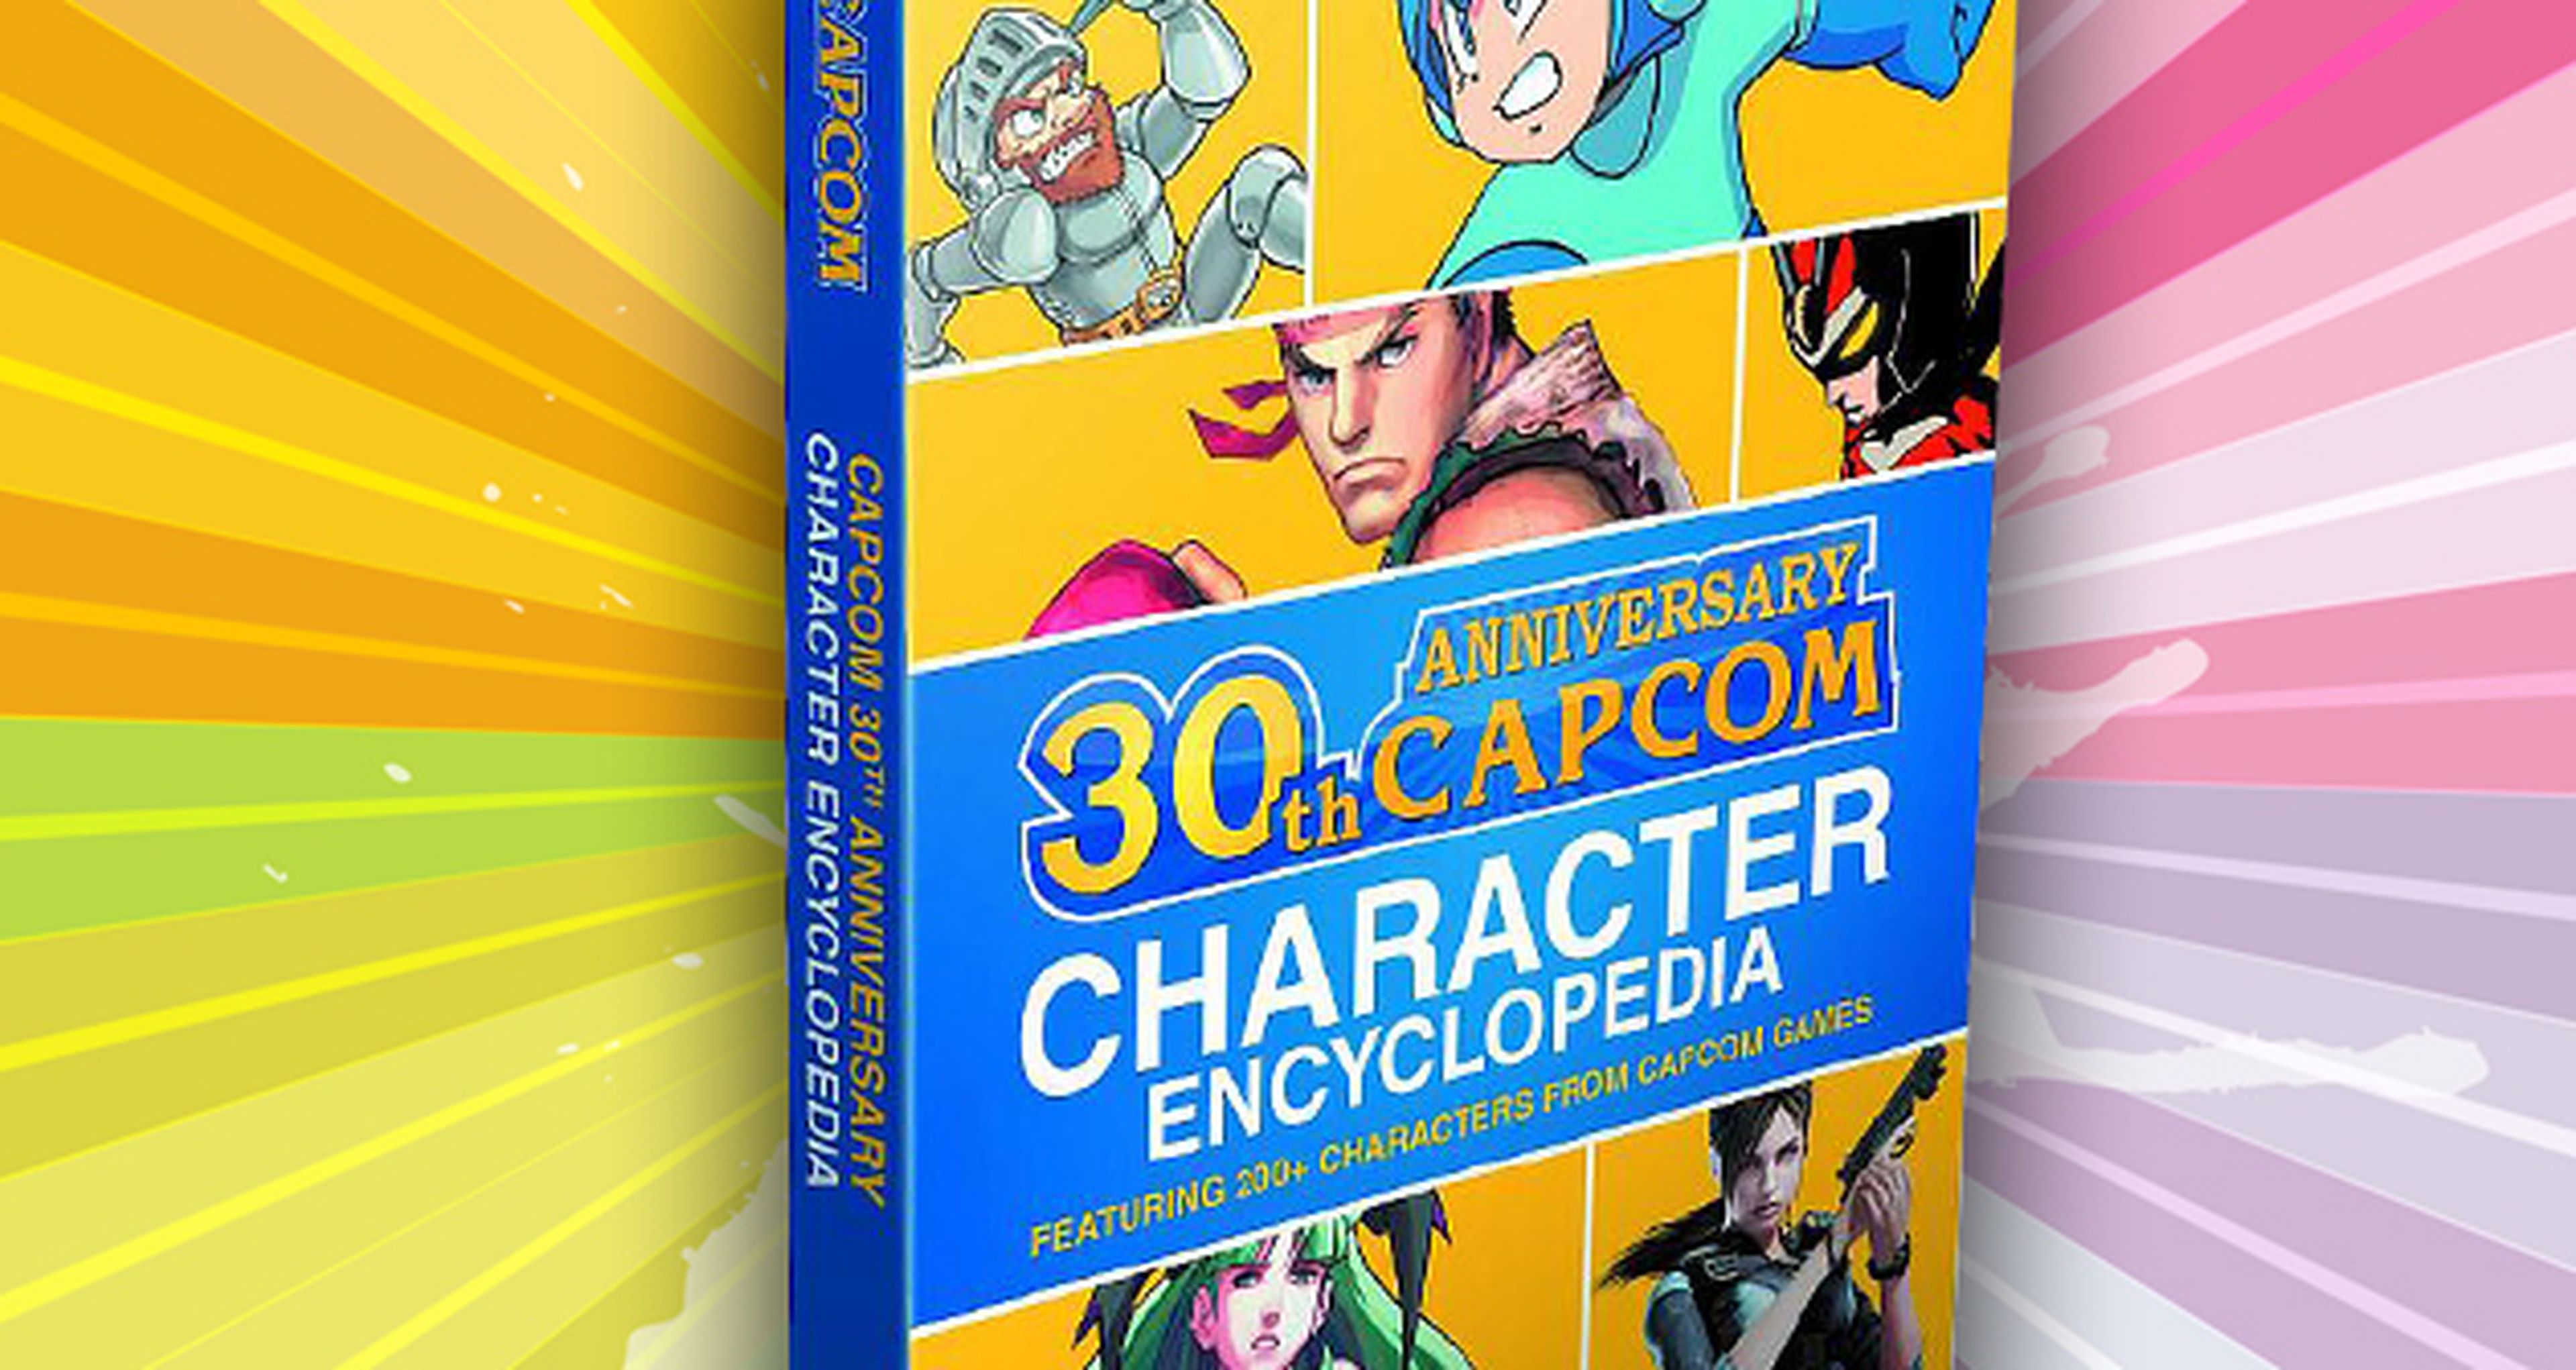 Capcom publicará una enciclopedia de sus personajes